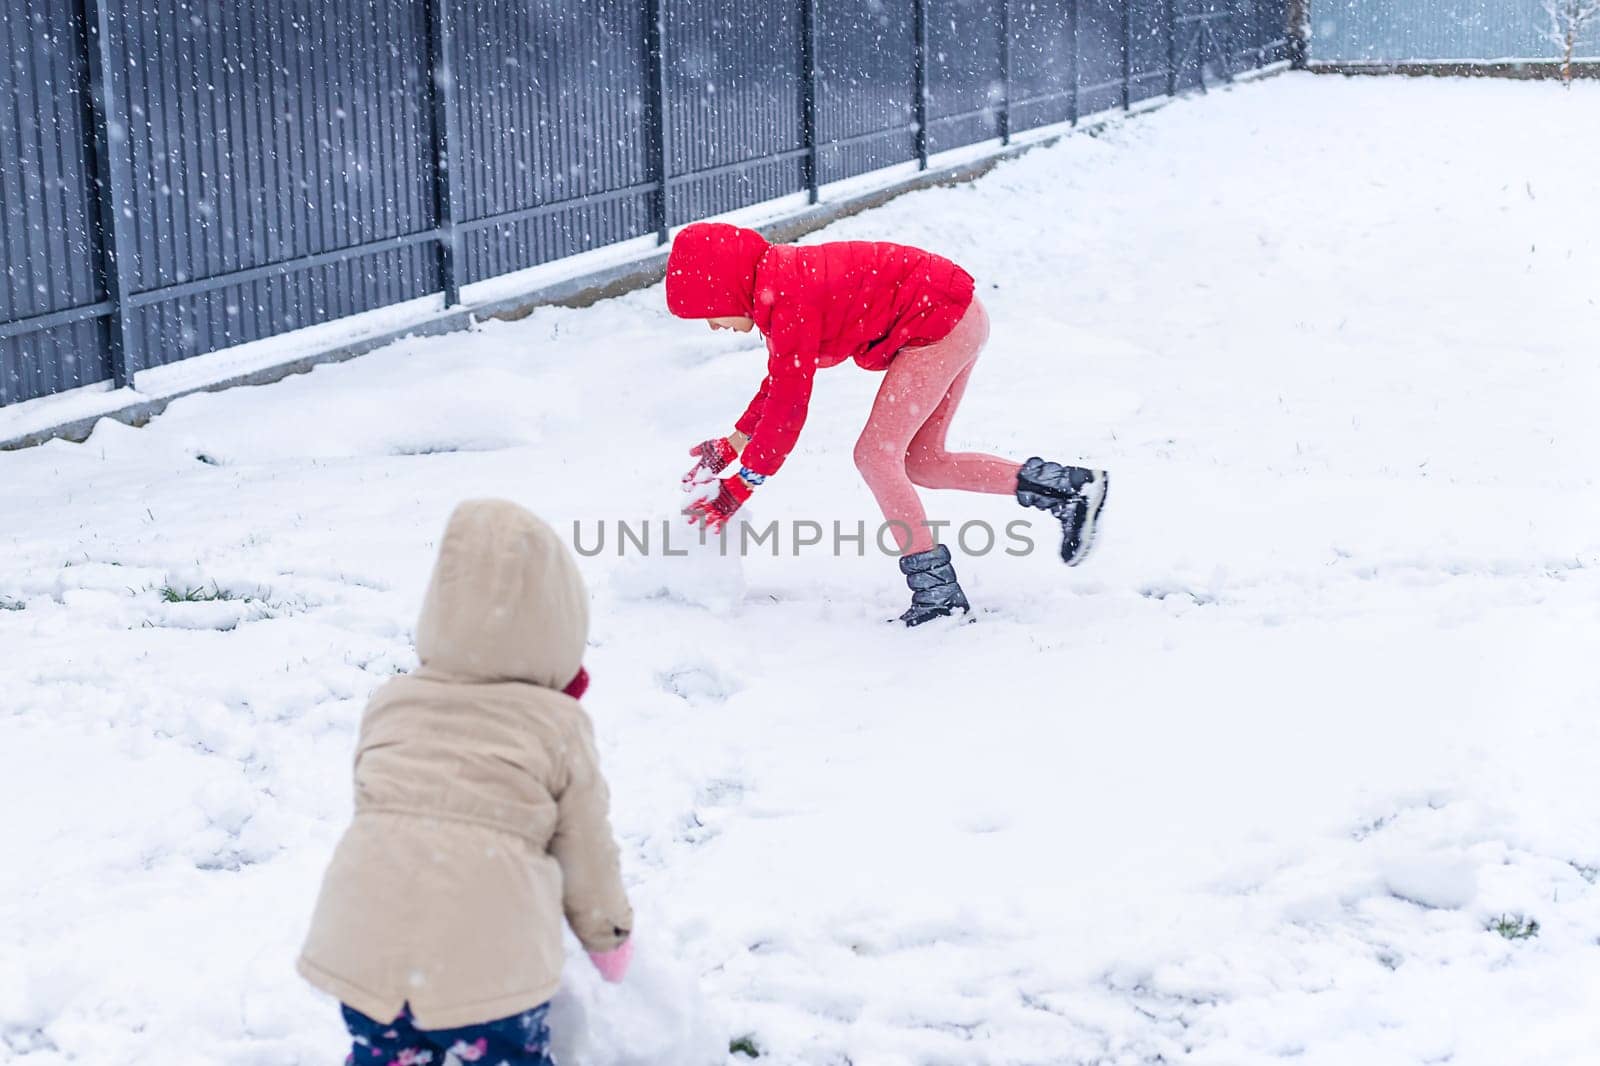 Children make a snowman in winter. Selective focus. Kid.